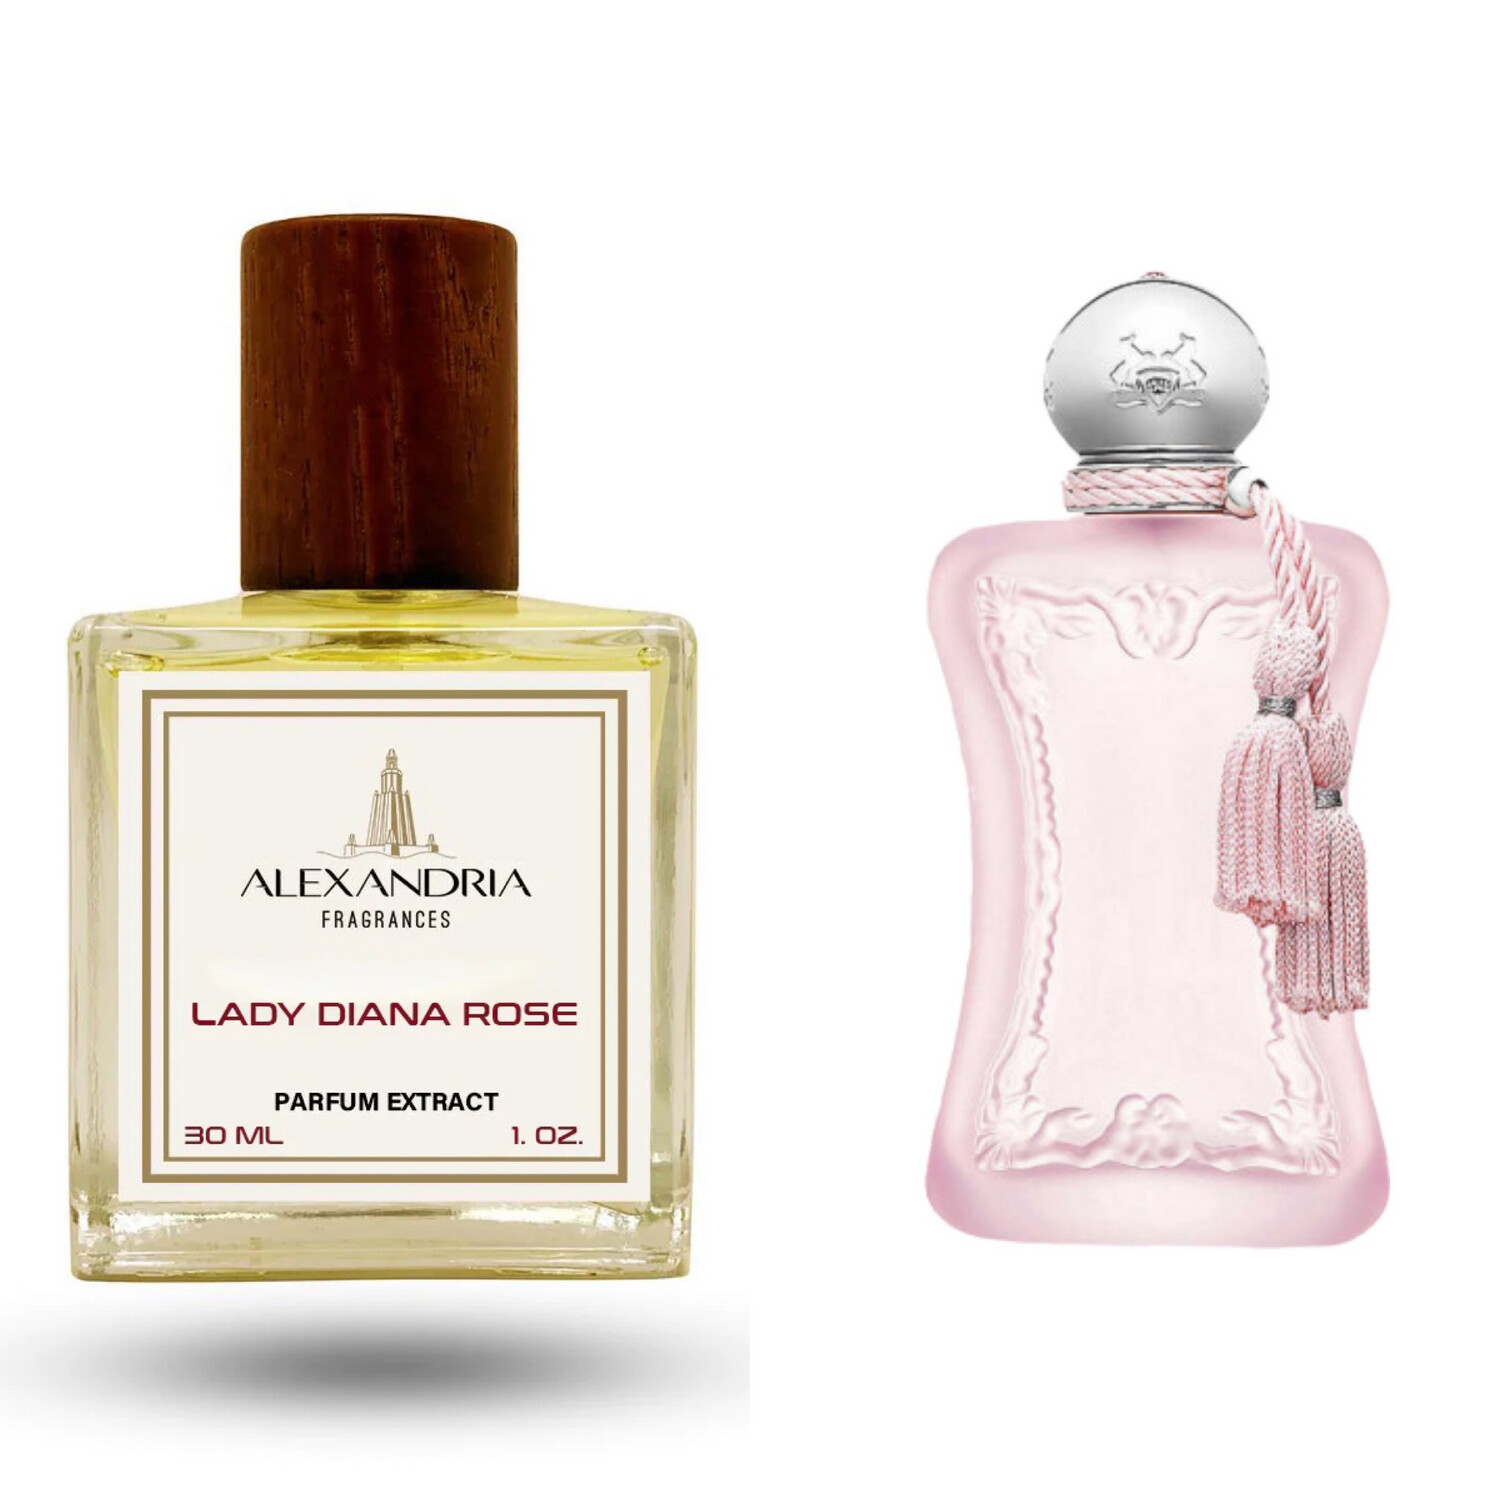 Lady Diana Rose Inspirado en Marly Delina Rose 55ml extracto perfume Alexandria Fragrances 